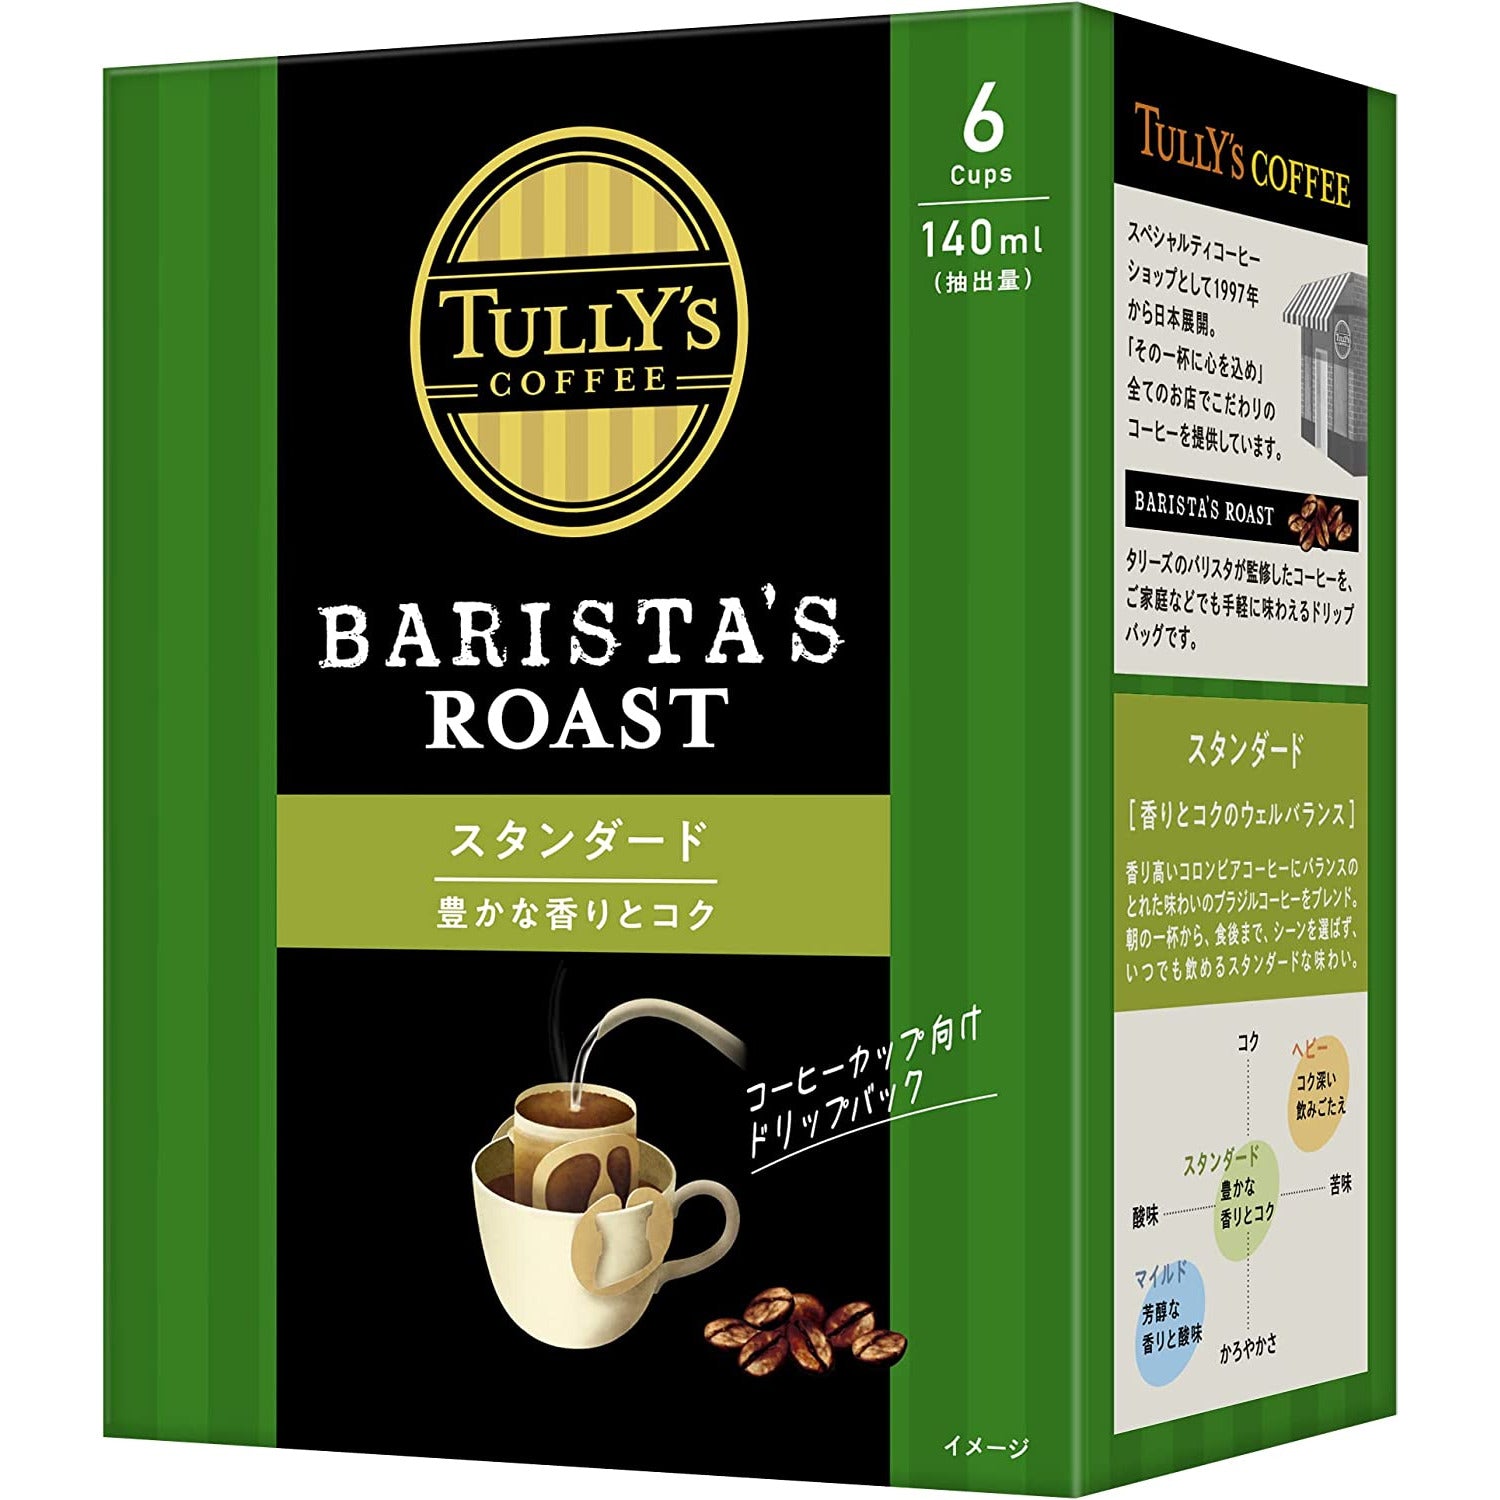 Itoen Tully's Coffee Barista's Roast Standard Drip Coffee 54g (9g x 6 bags)